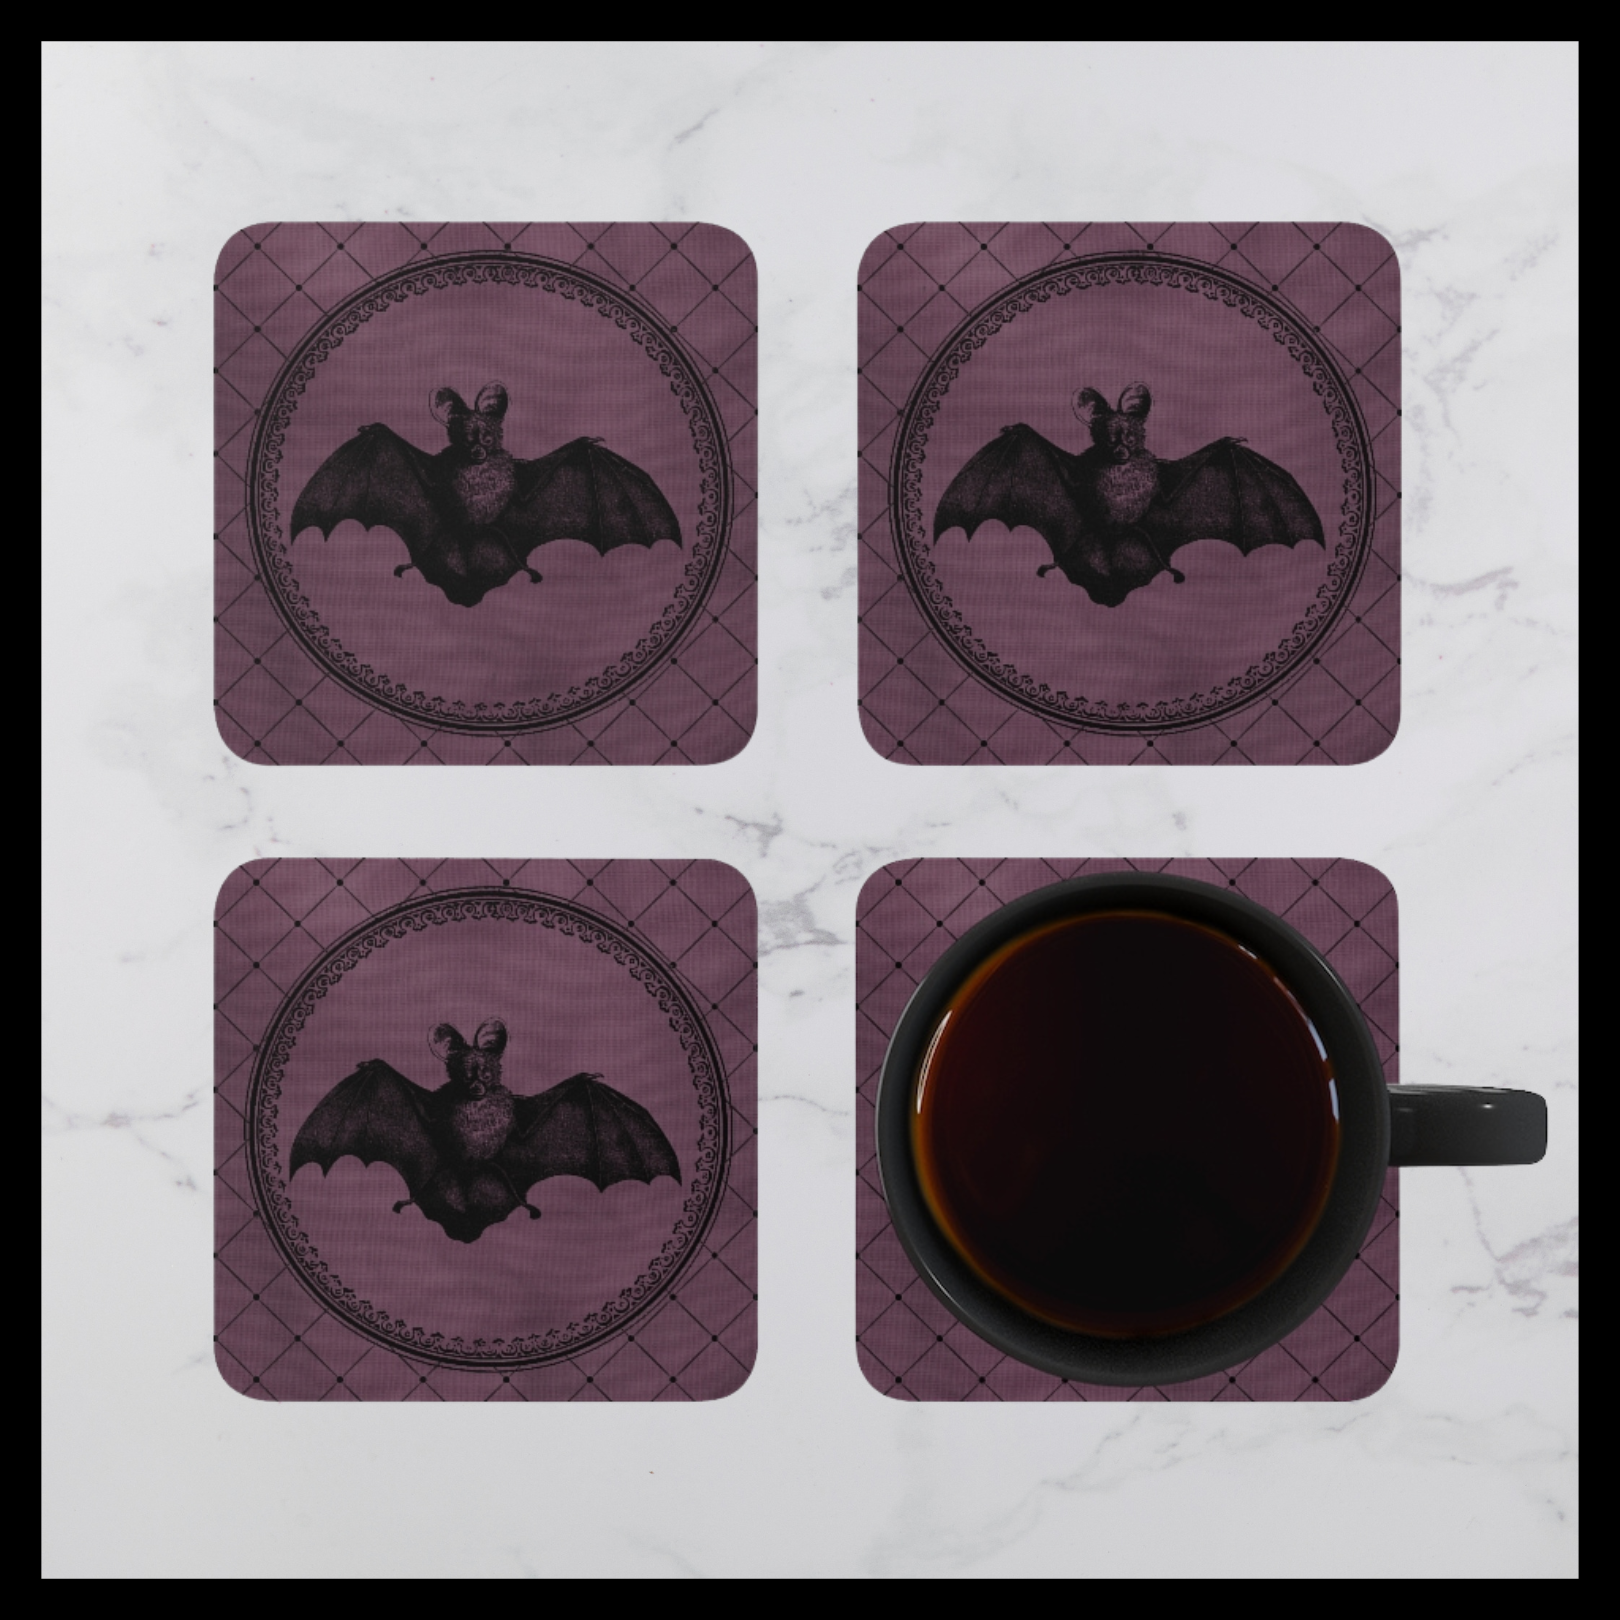 Gothic Victorian Style Bat Corkwood Coaster Set of 4 - Spooky Halloween Decor